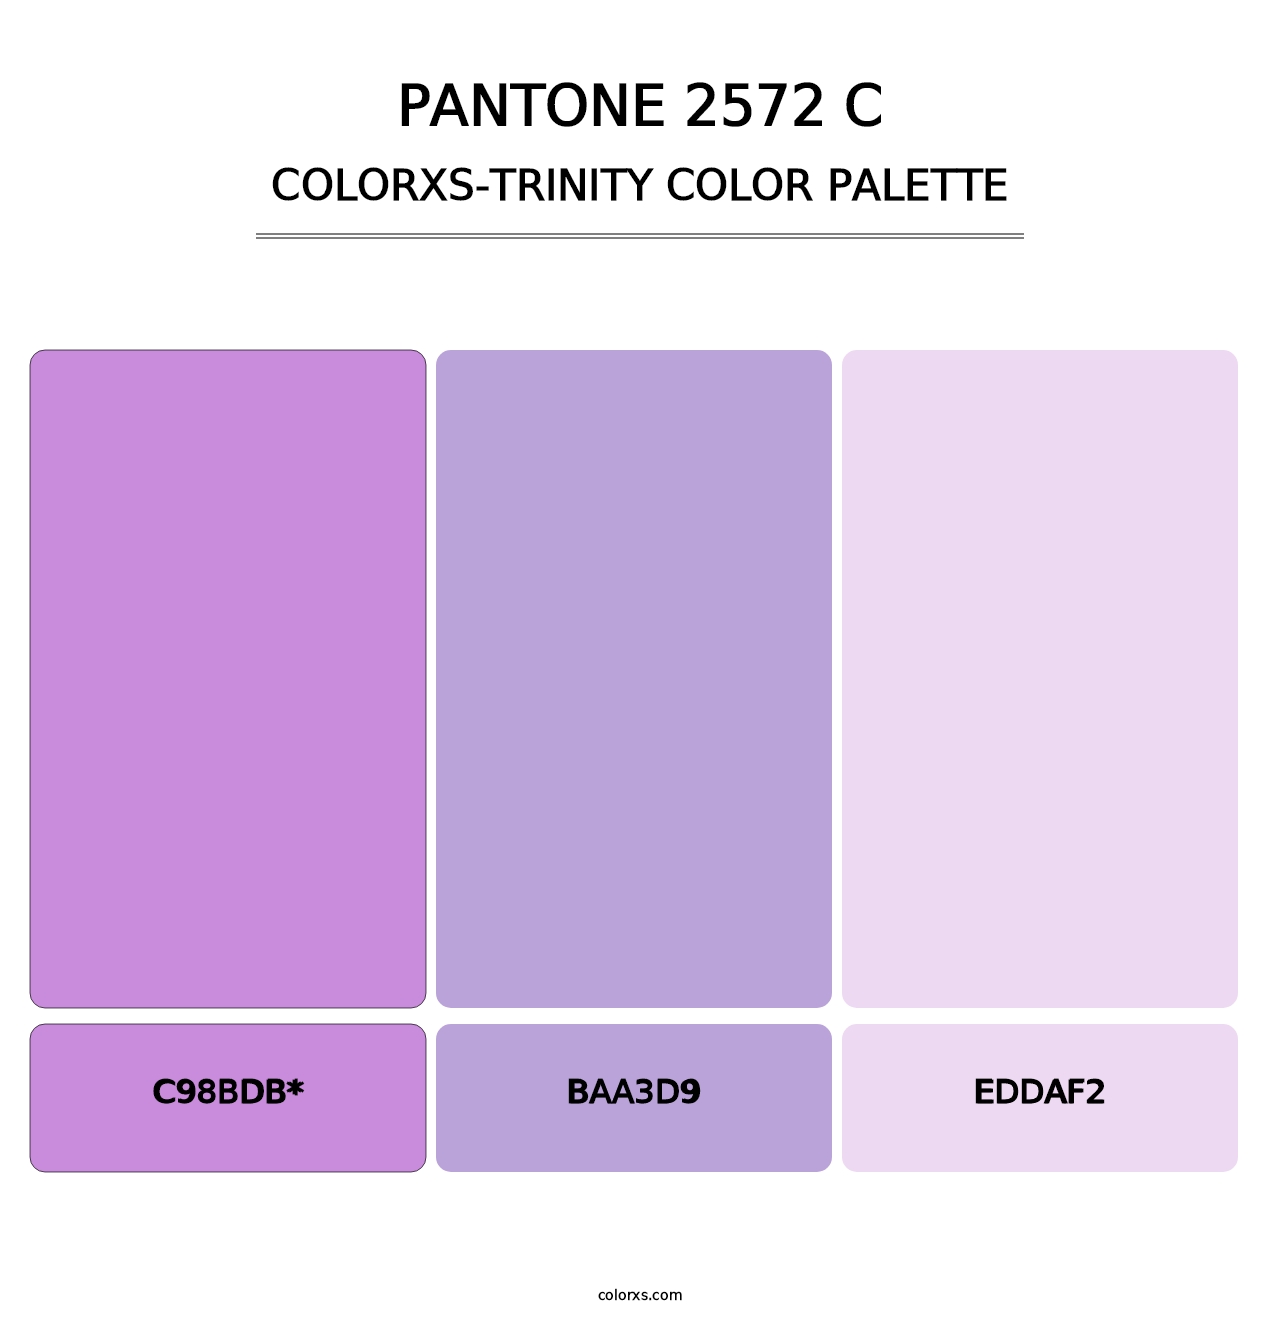 PANTONE 2572 C - Colorxs Trinity Palette